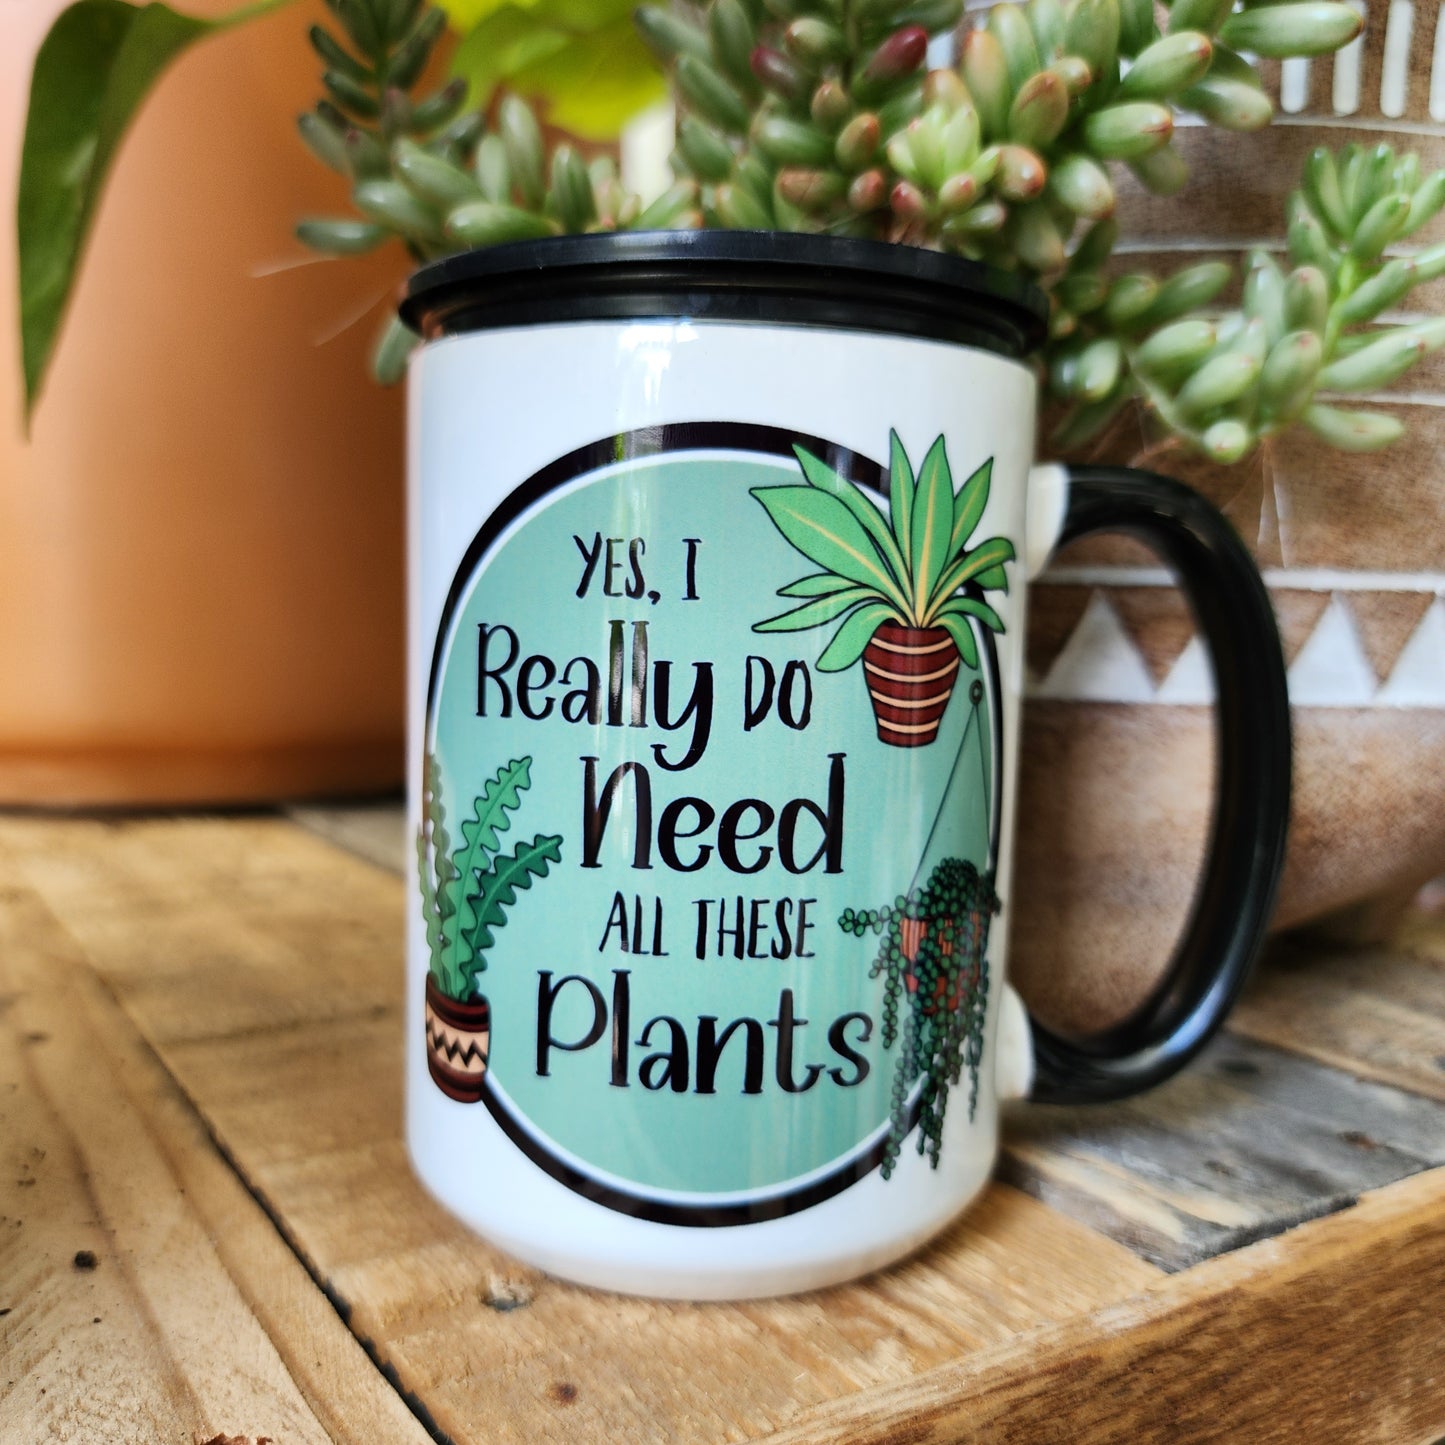 I Love Plants Mug